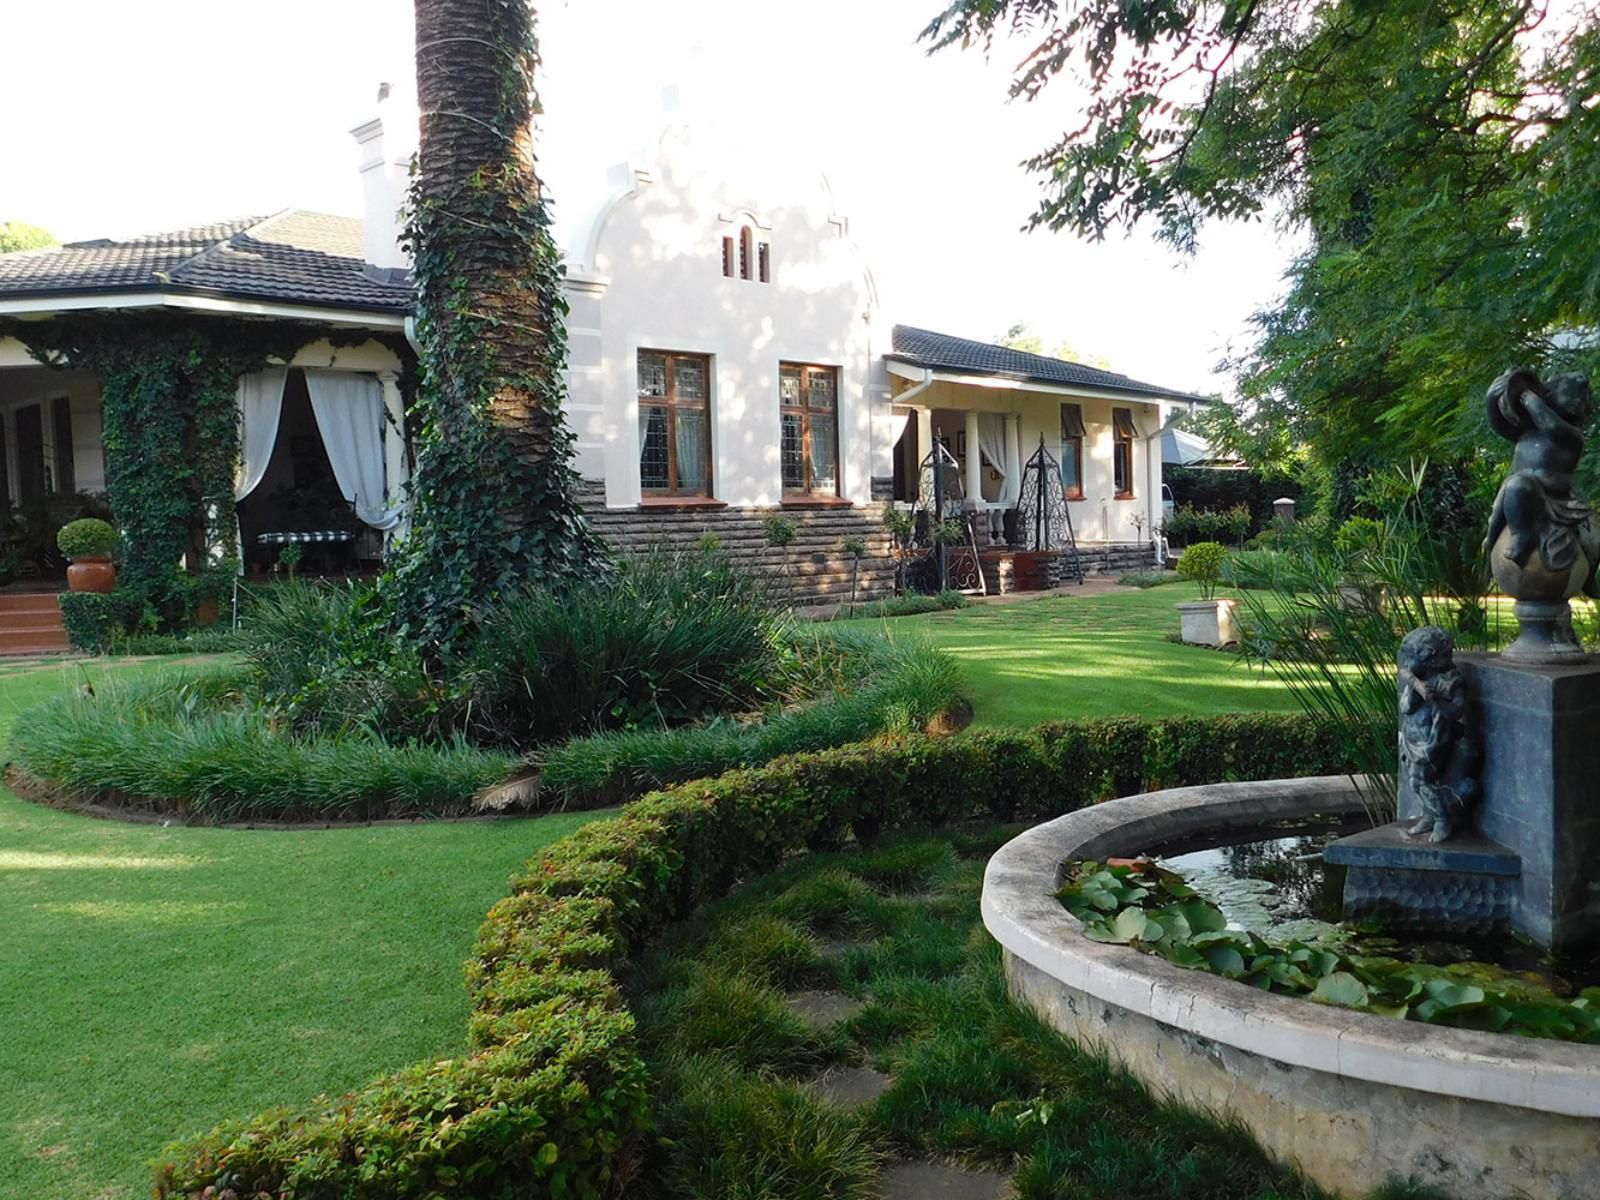 Dankhof Guest House Lydenburg Mpumalanga South Africa House, Building, Architecture, Plant, Nature, Garden